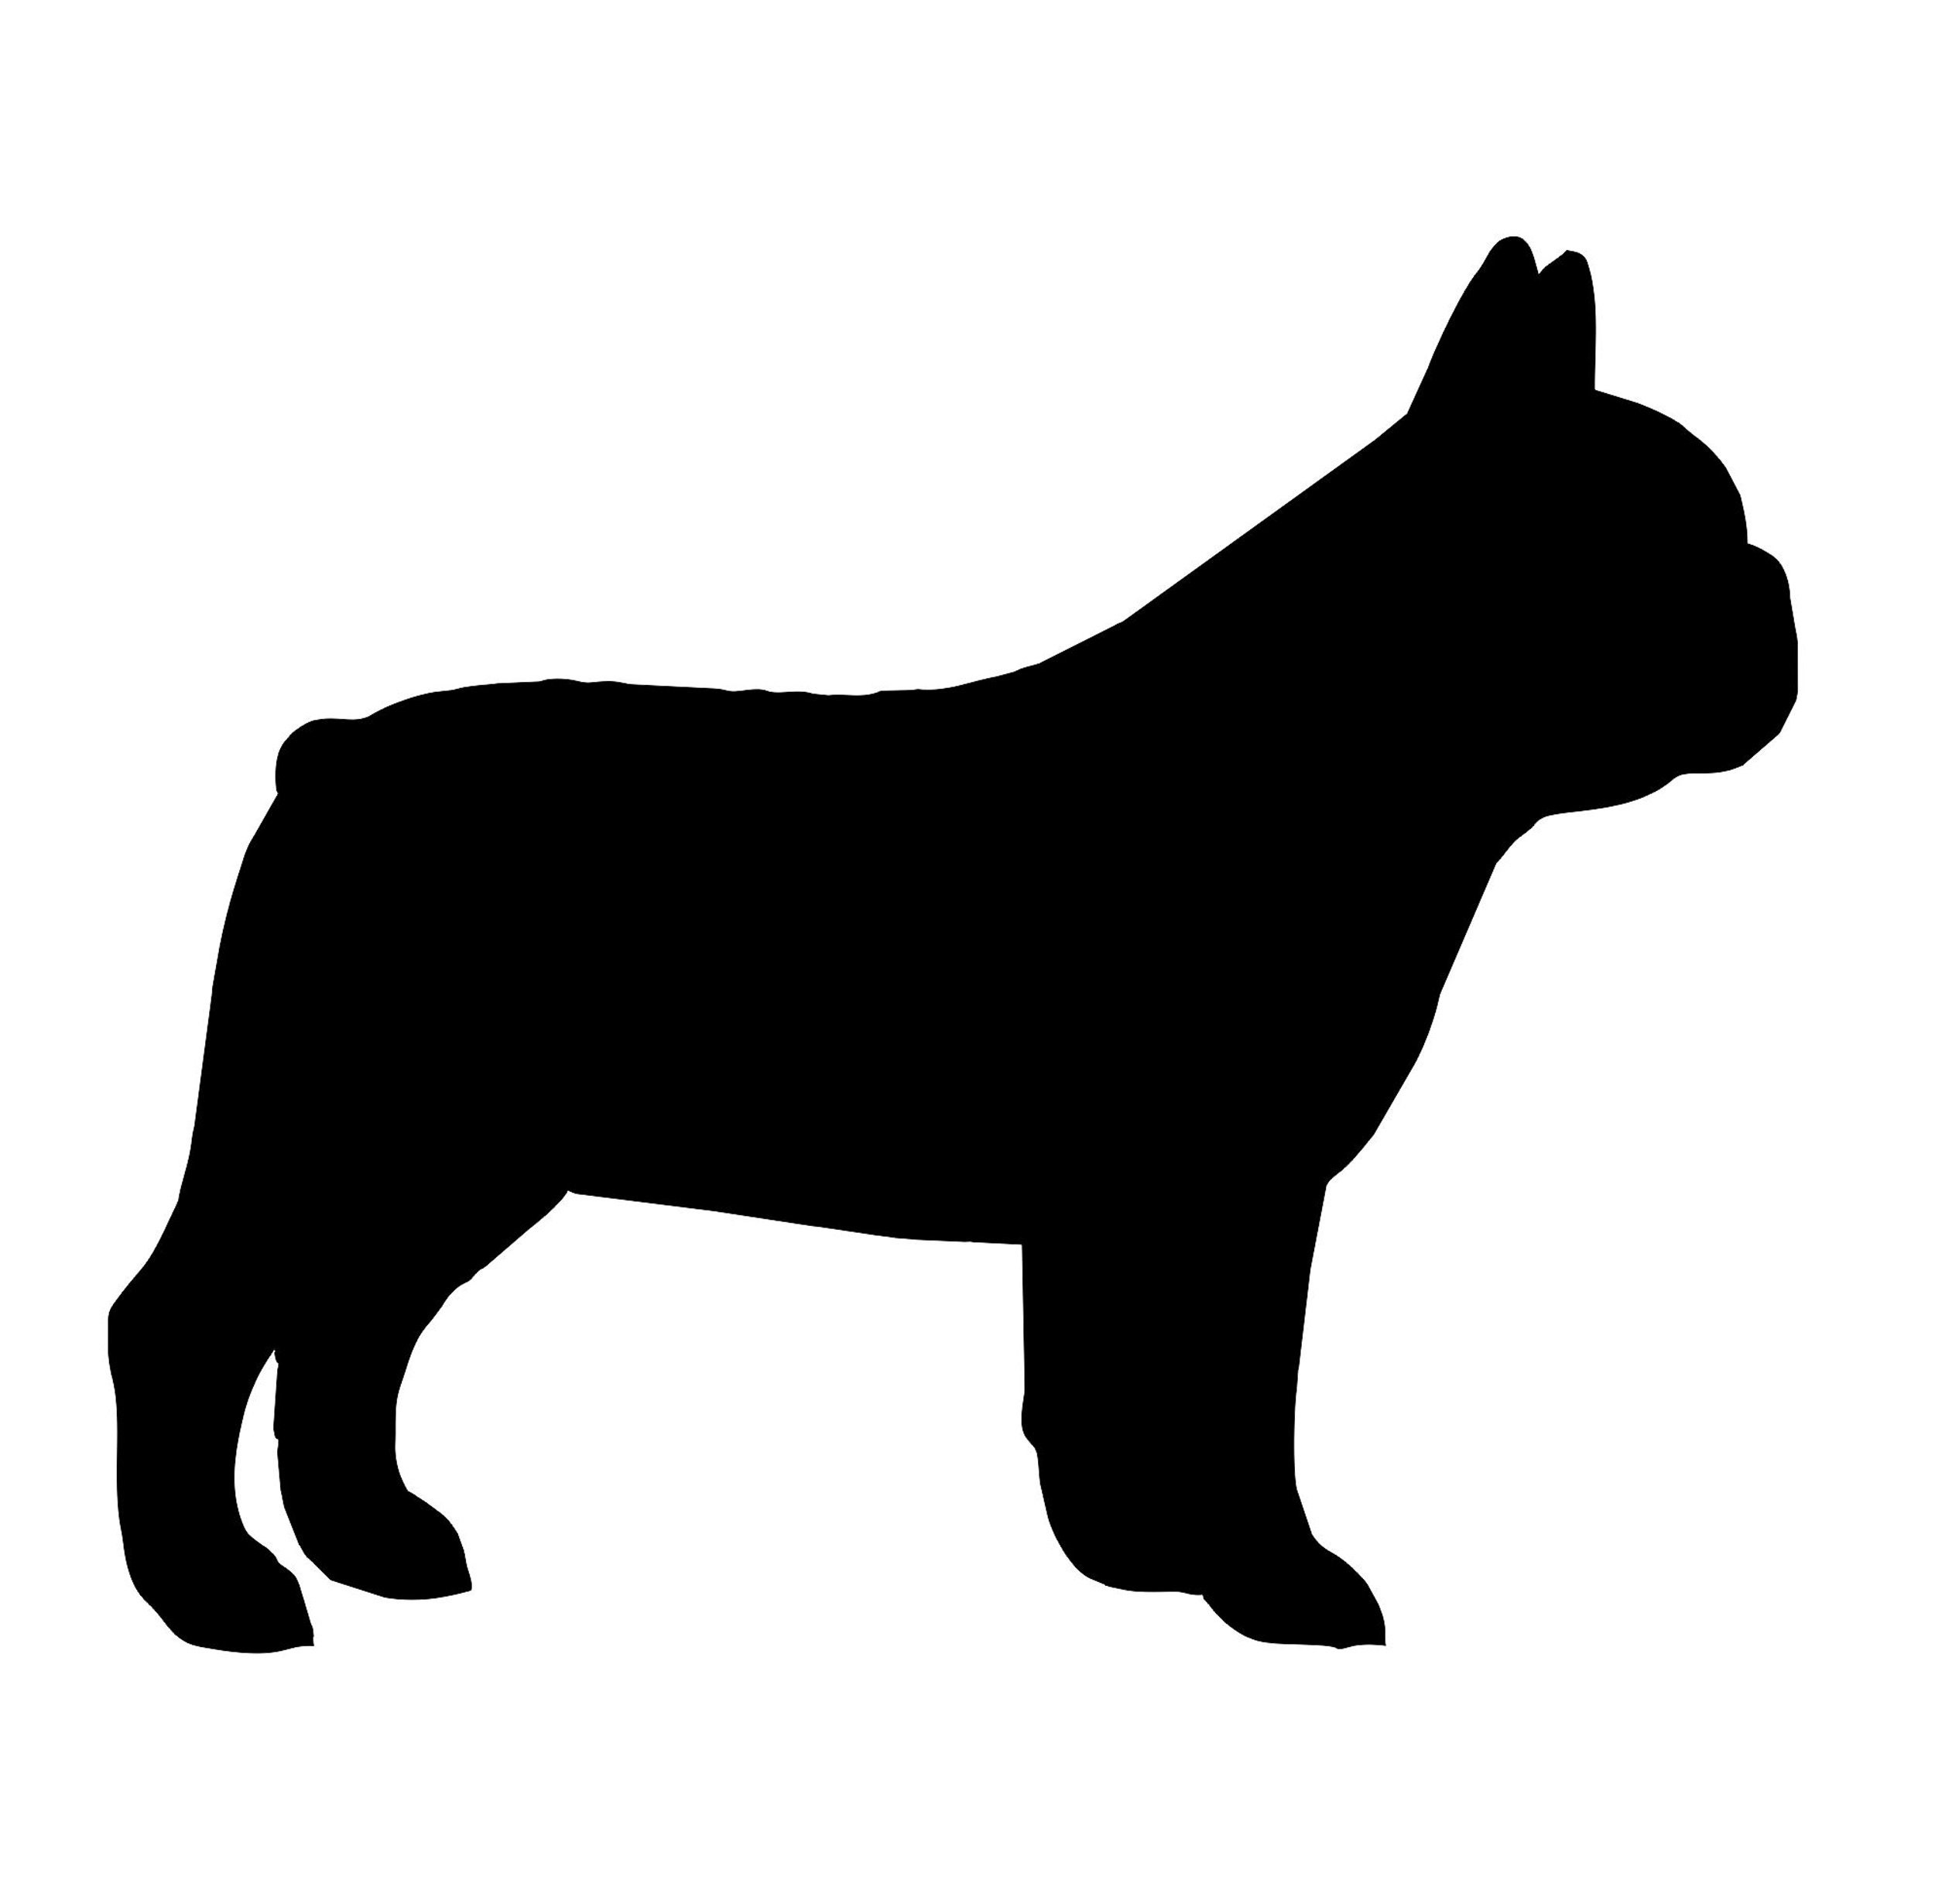 French Bulldog Silhouette Clip-art, SVG, PDF, Ai, Jpeg - Etsy